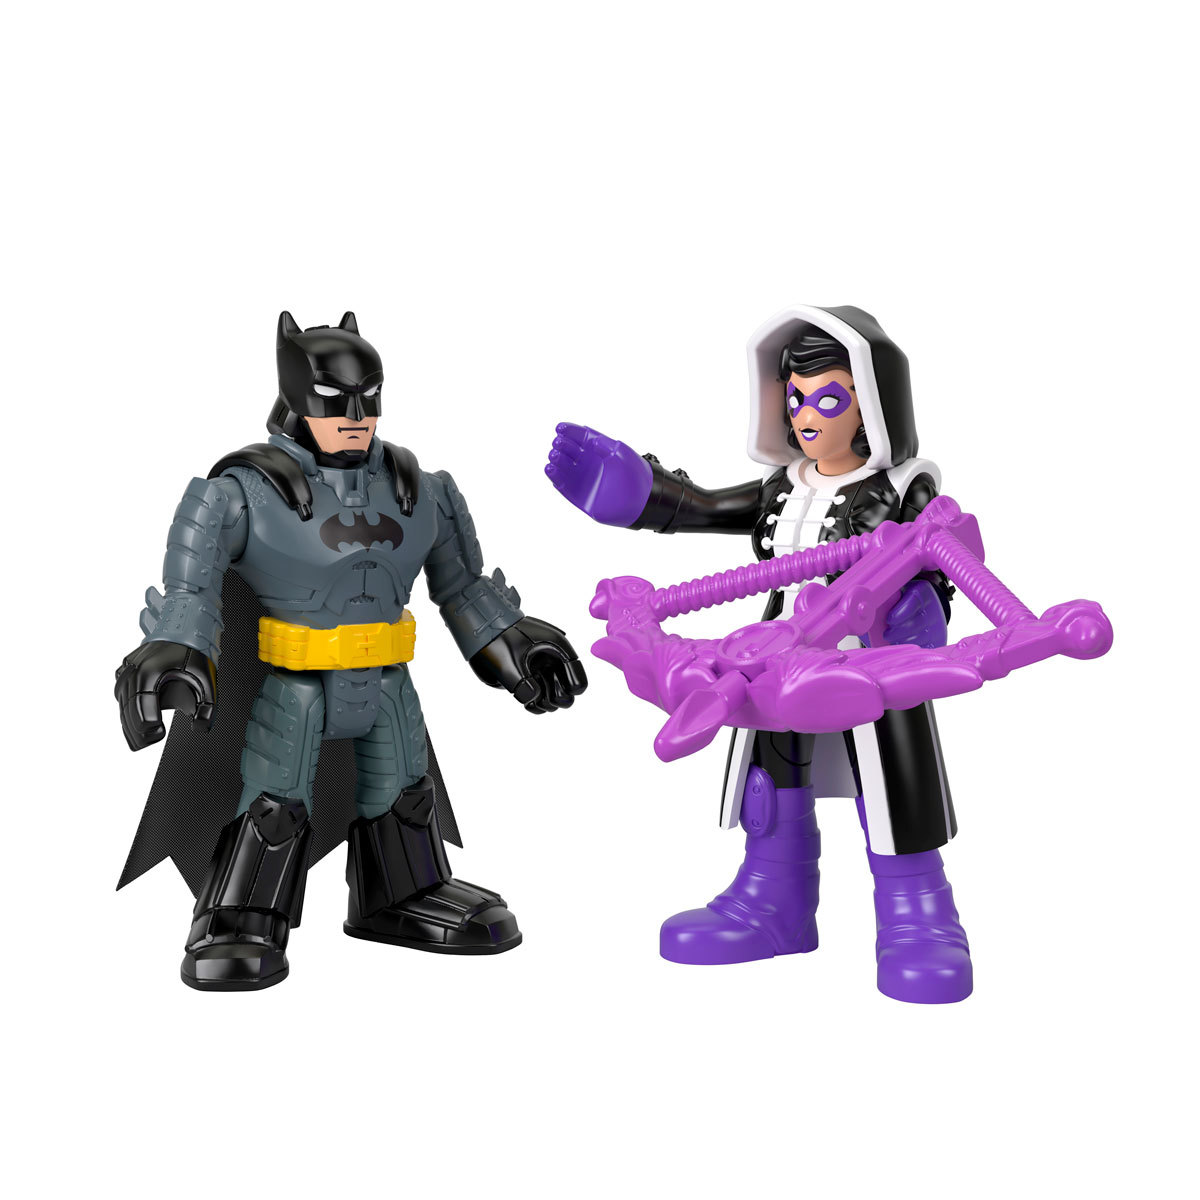 Details about   Huntress Legends of batman Fisher-Price Imaginext Dc Super Friends figure toys 